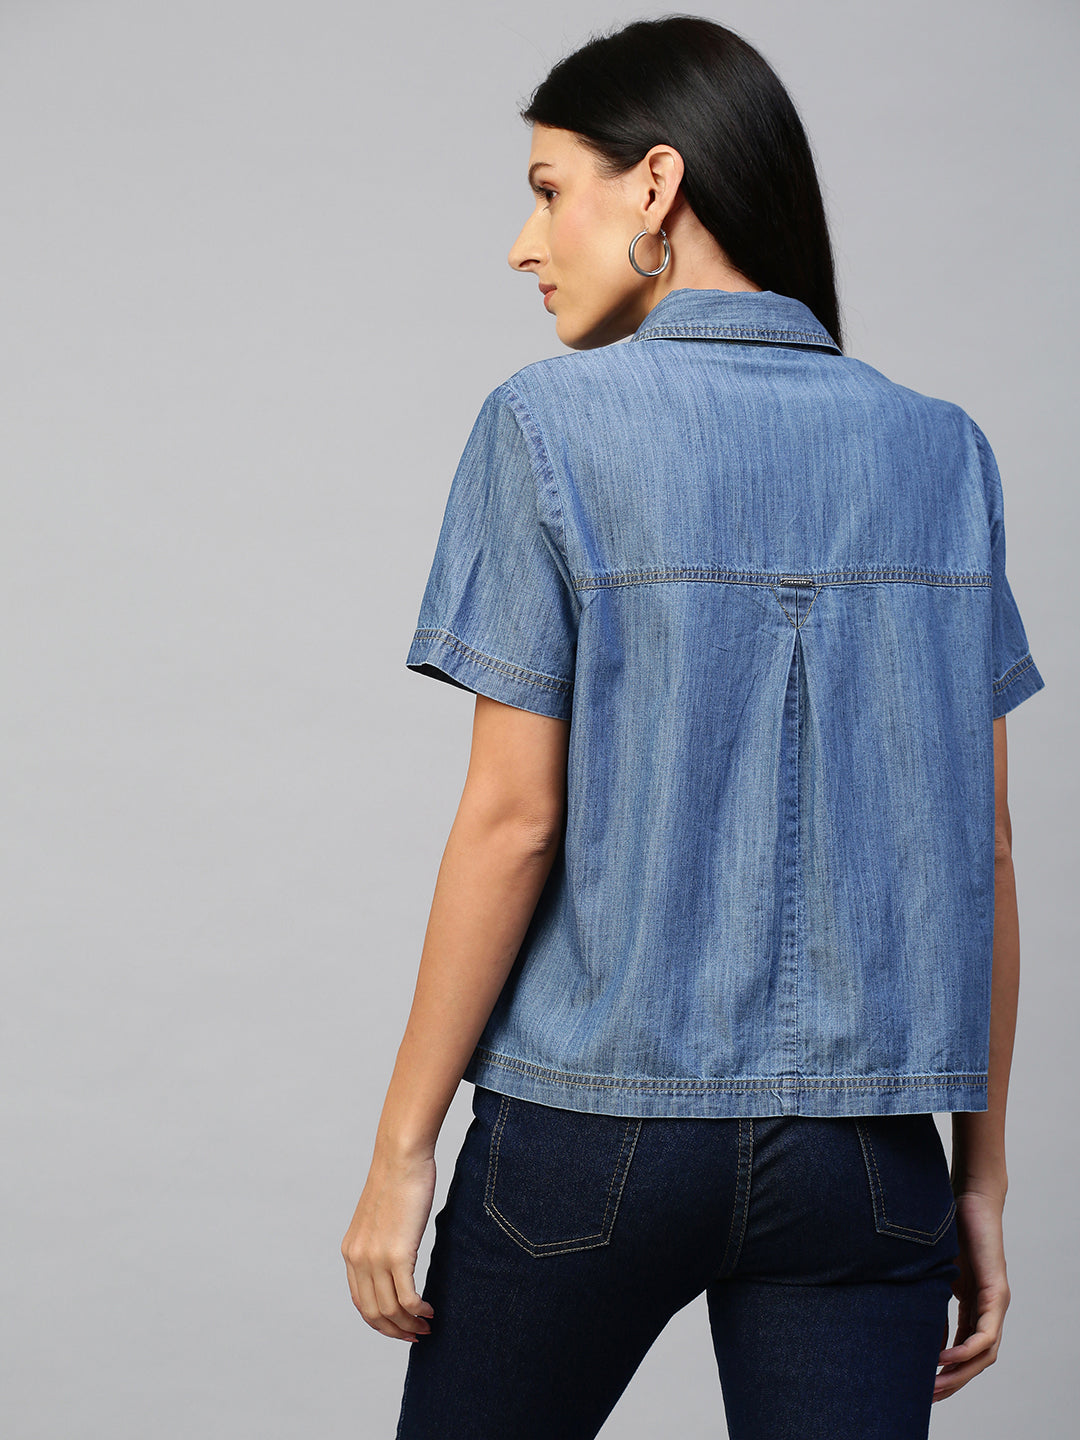 Mid Wash Blue, Light Weight Denim Short Sleeved Crop Shirt With Contrast Detailing